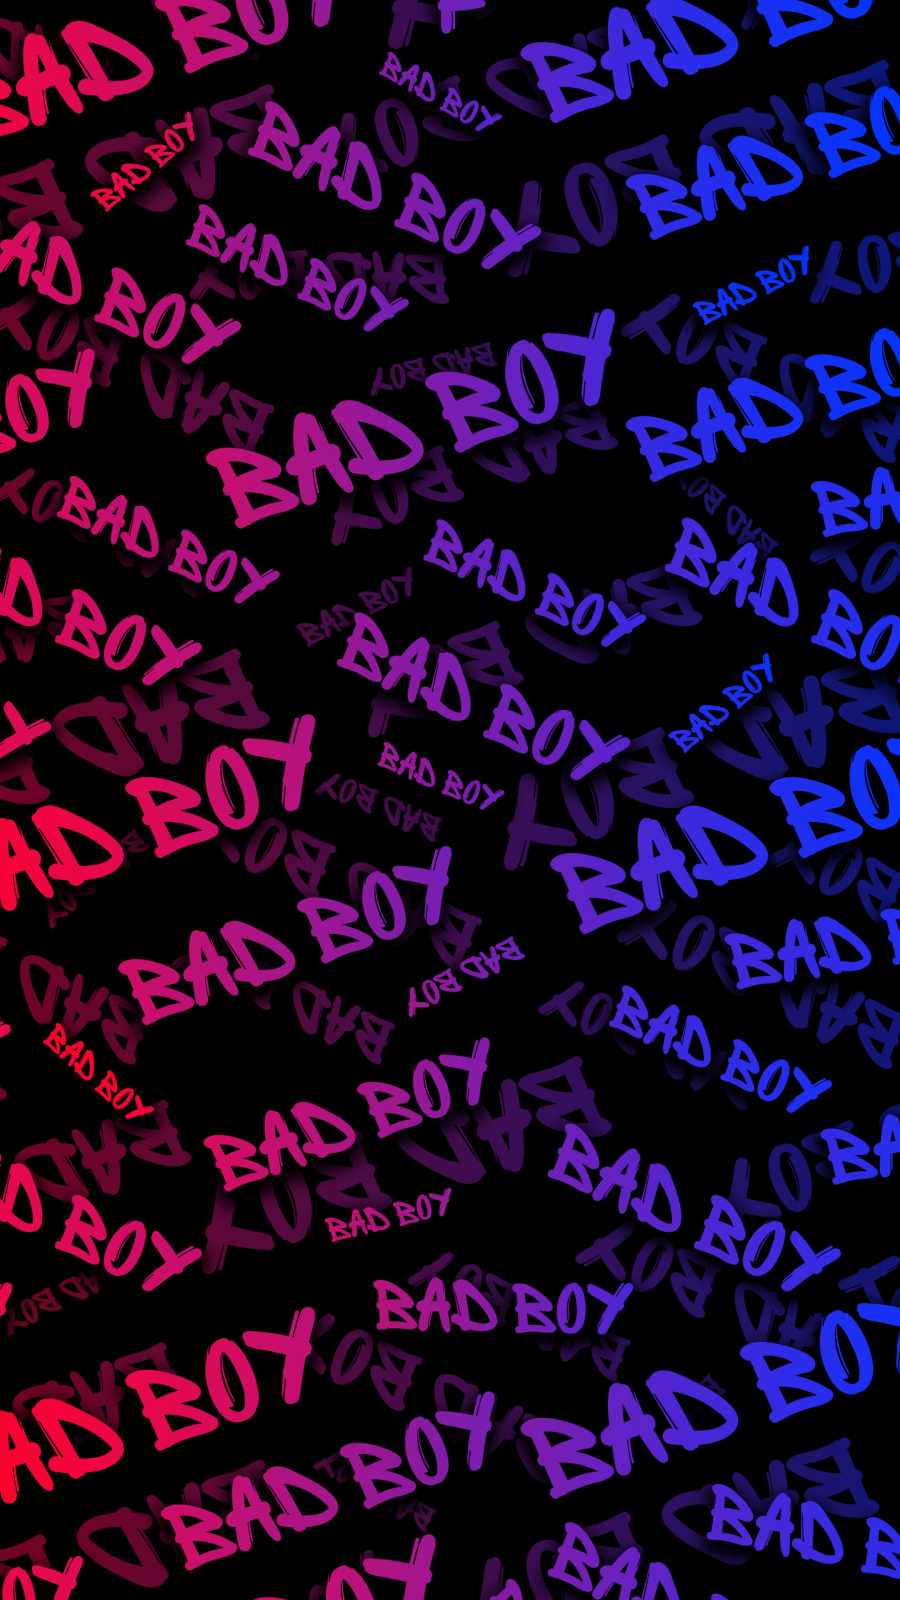 Bad Boy IPhone Wallpaper Wallpaper, iPhone Wallpaper